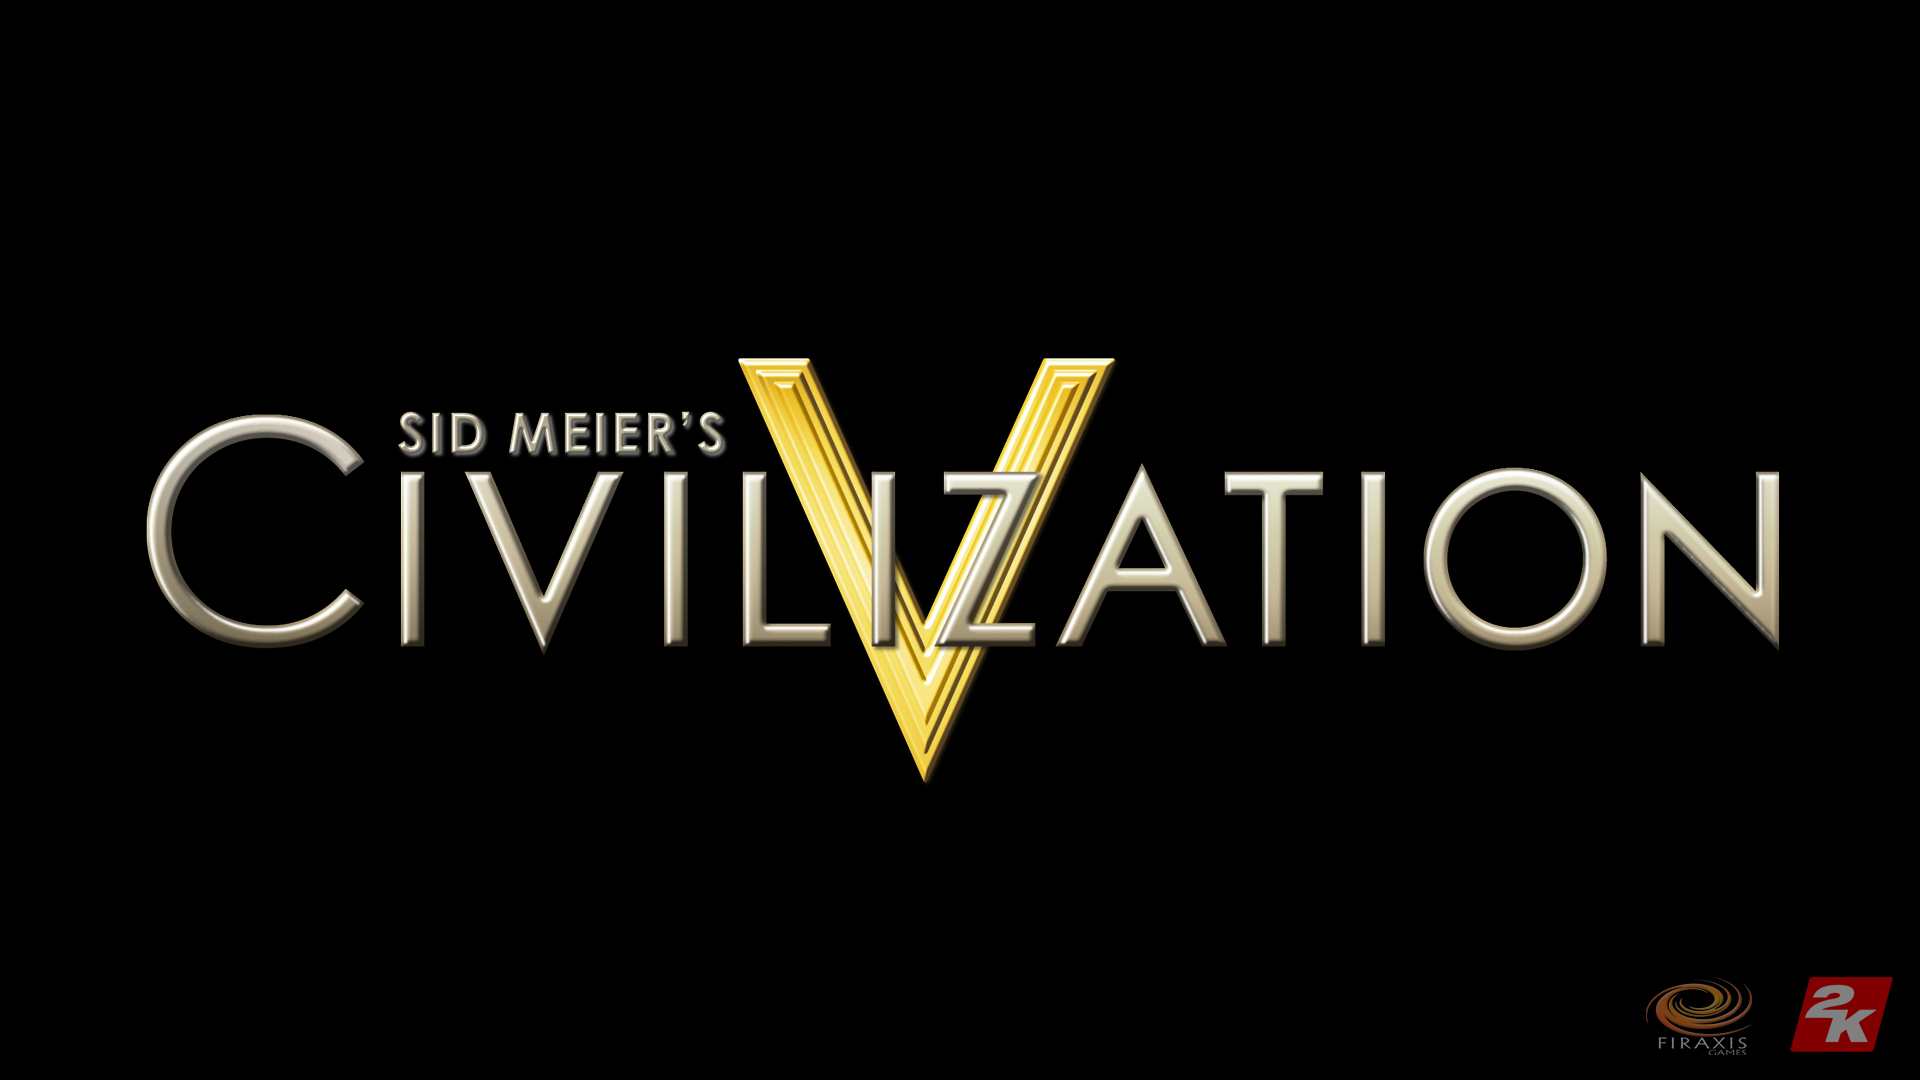 video game, sid meier's civilization v, civilization